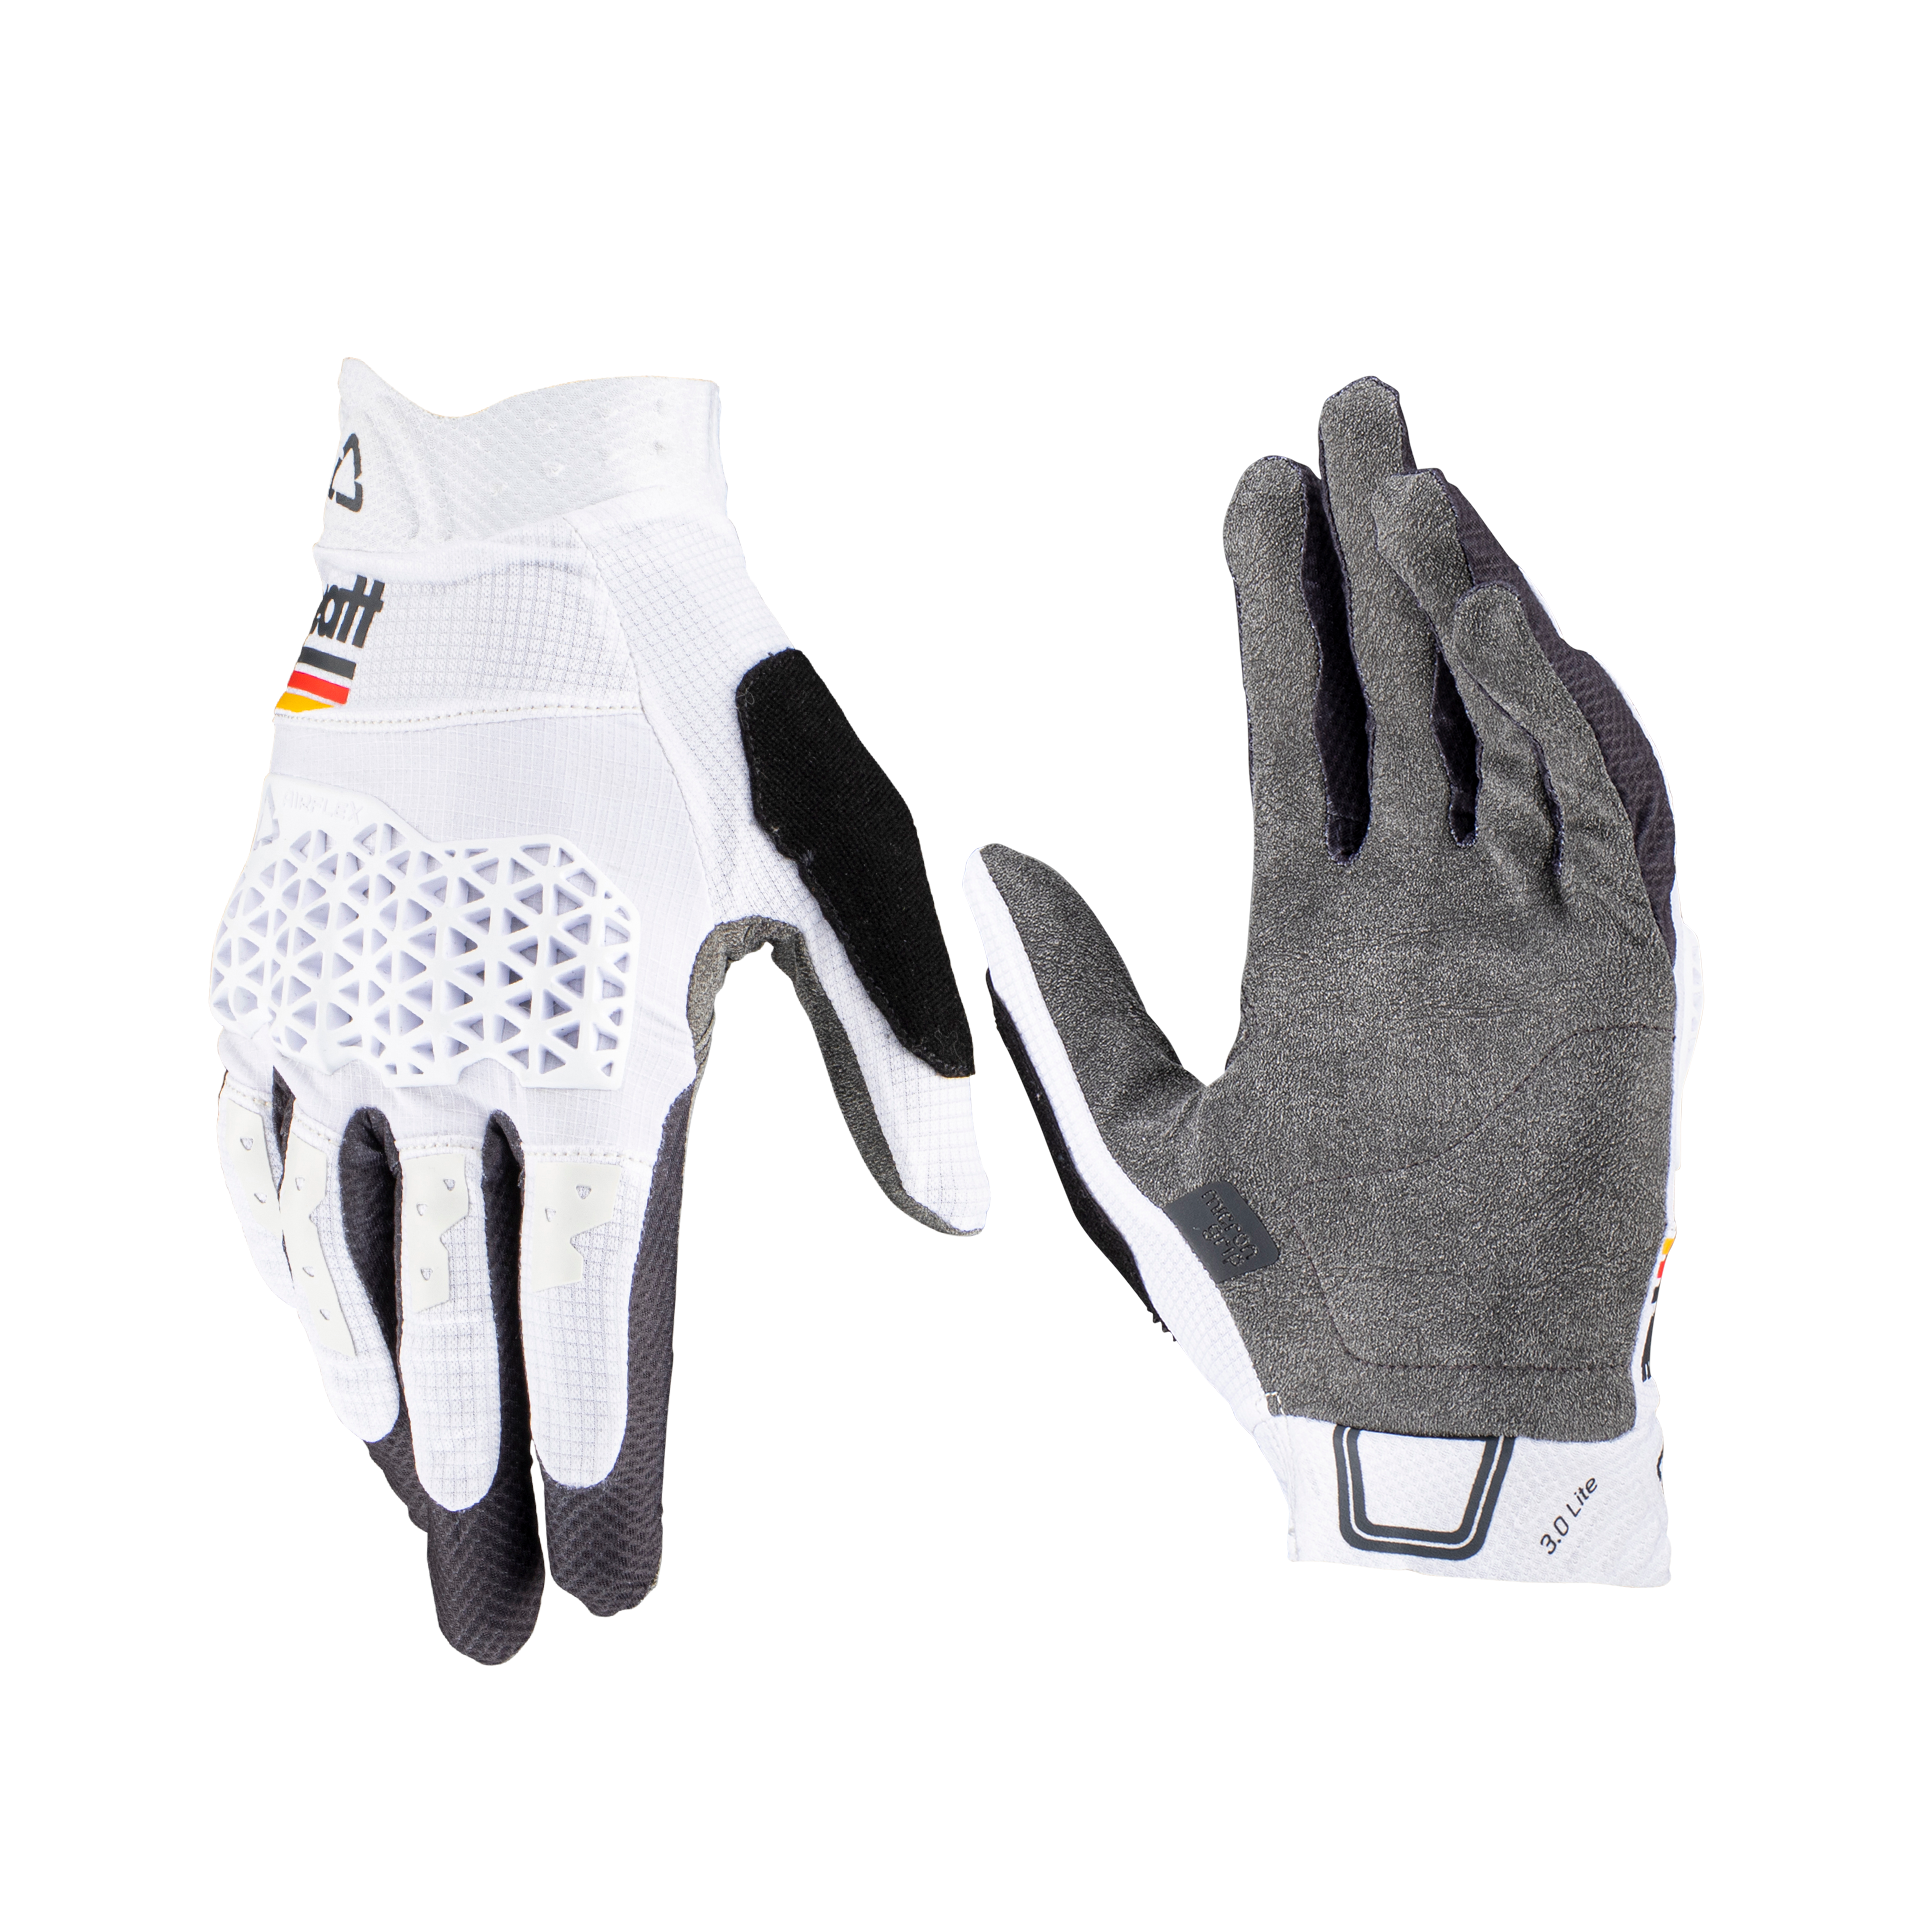 Leatt Protection Glove Mtb 3.0 Lite White S, Bike Protection Gear – Leatt CA